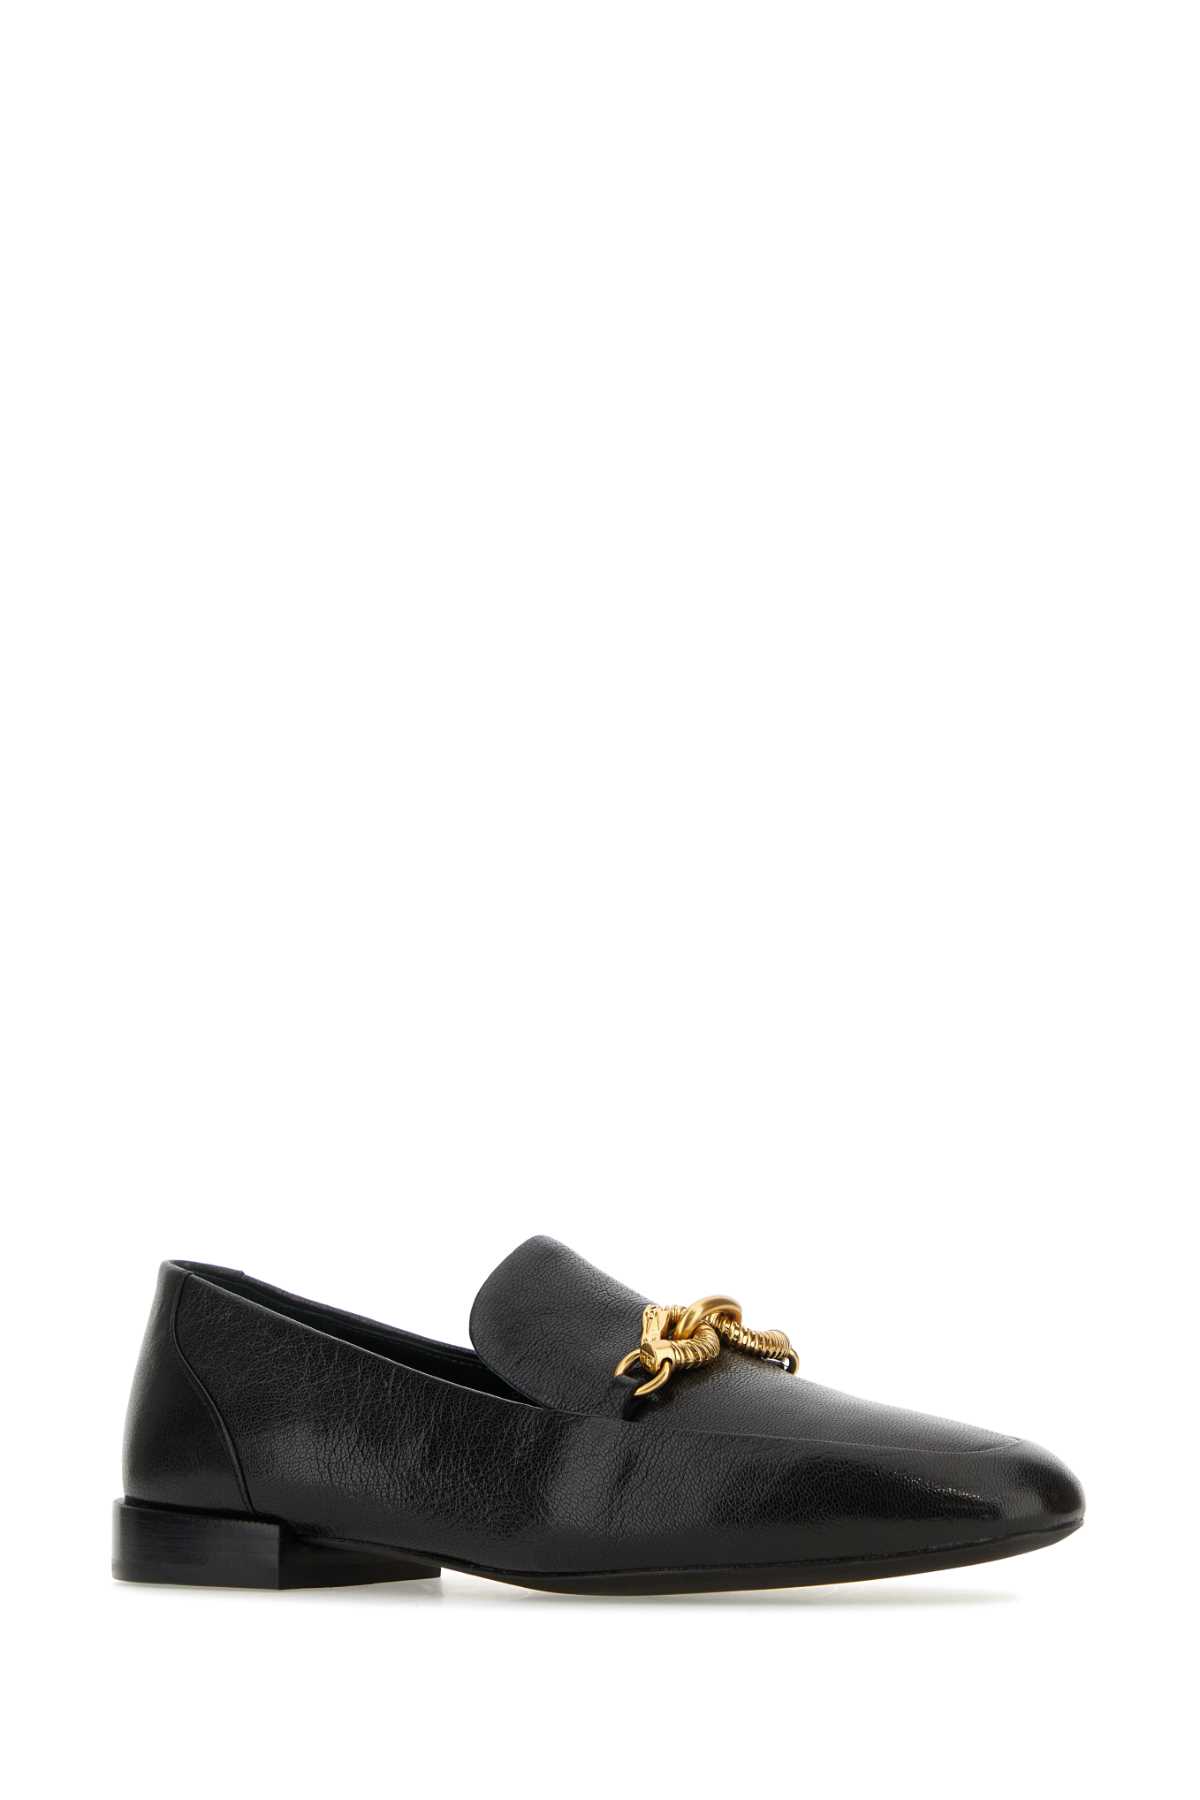 Shop Tory Burch Black Leather Jessa Loafers In Perfectblackgold